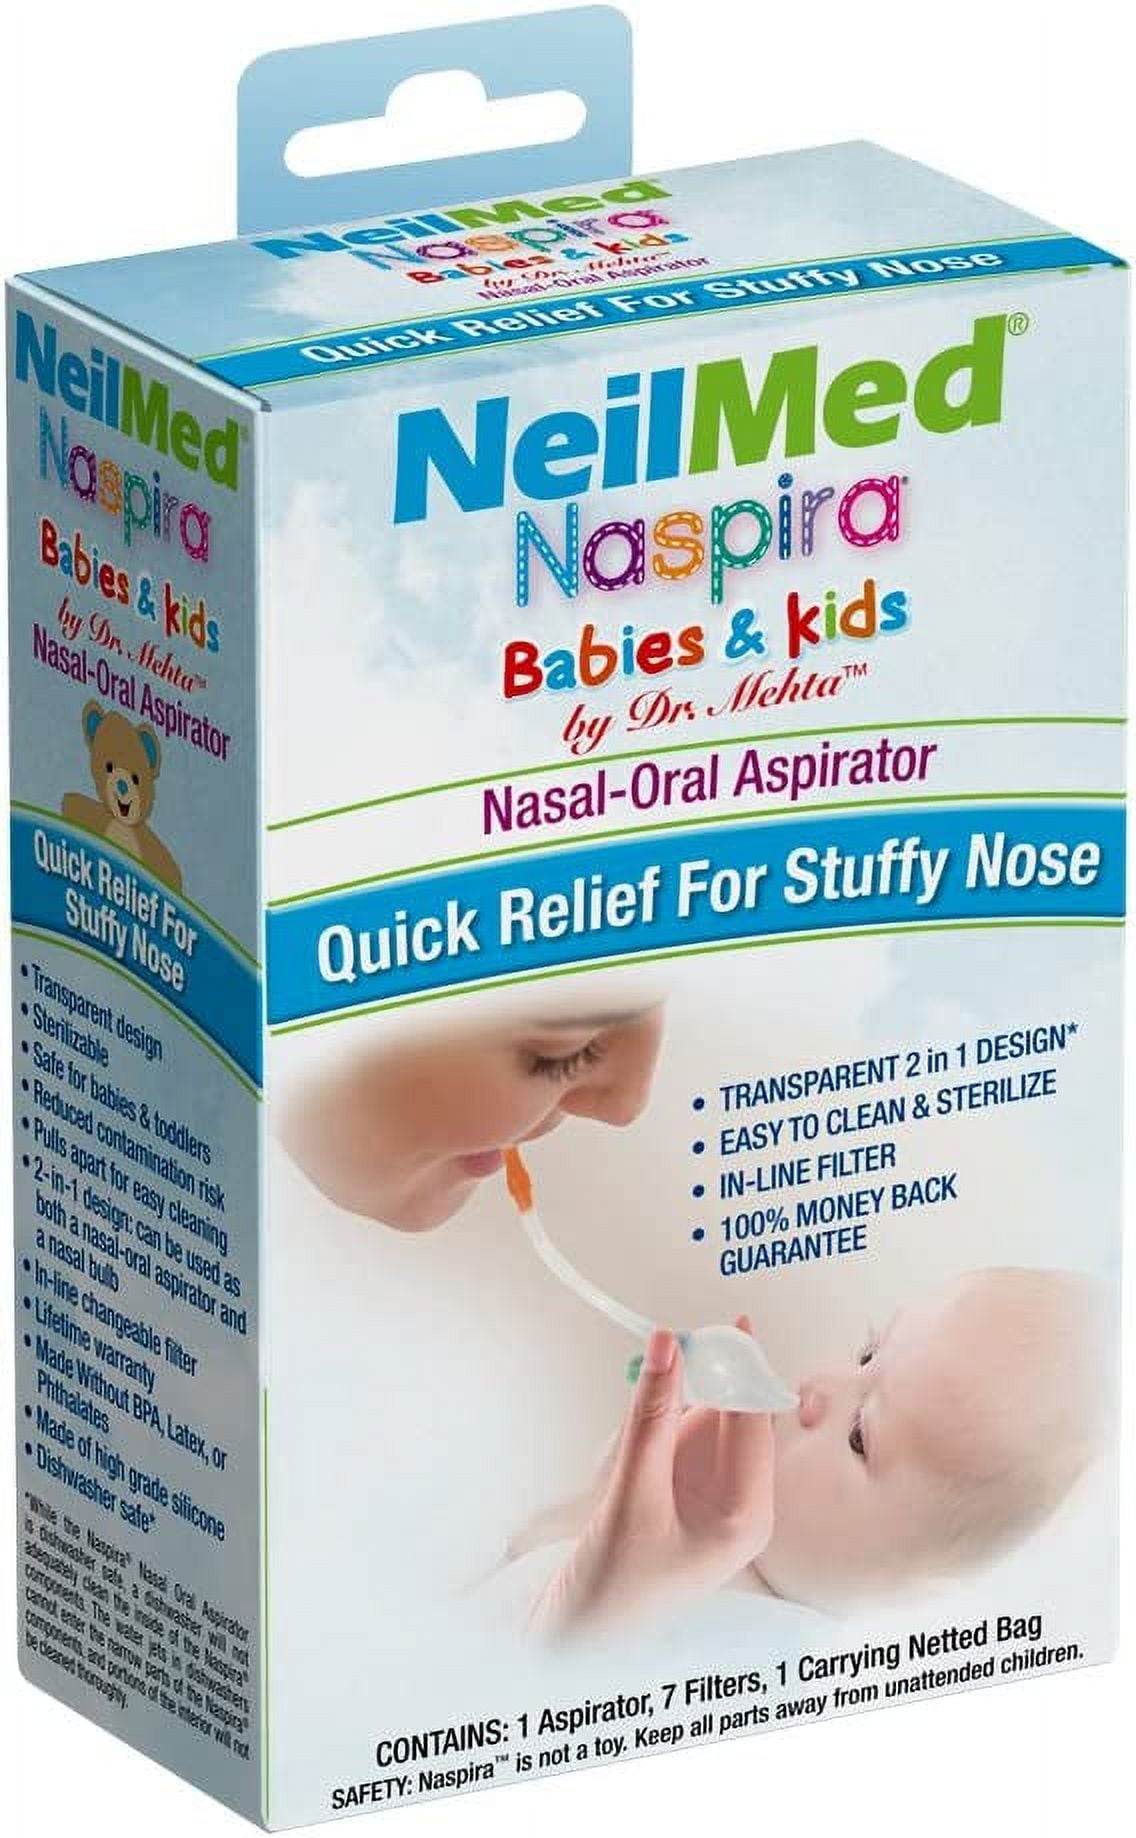 NeilMed Aspirator - Battery Operated Nasal Aspirator for Babies & Kids